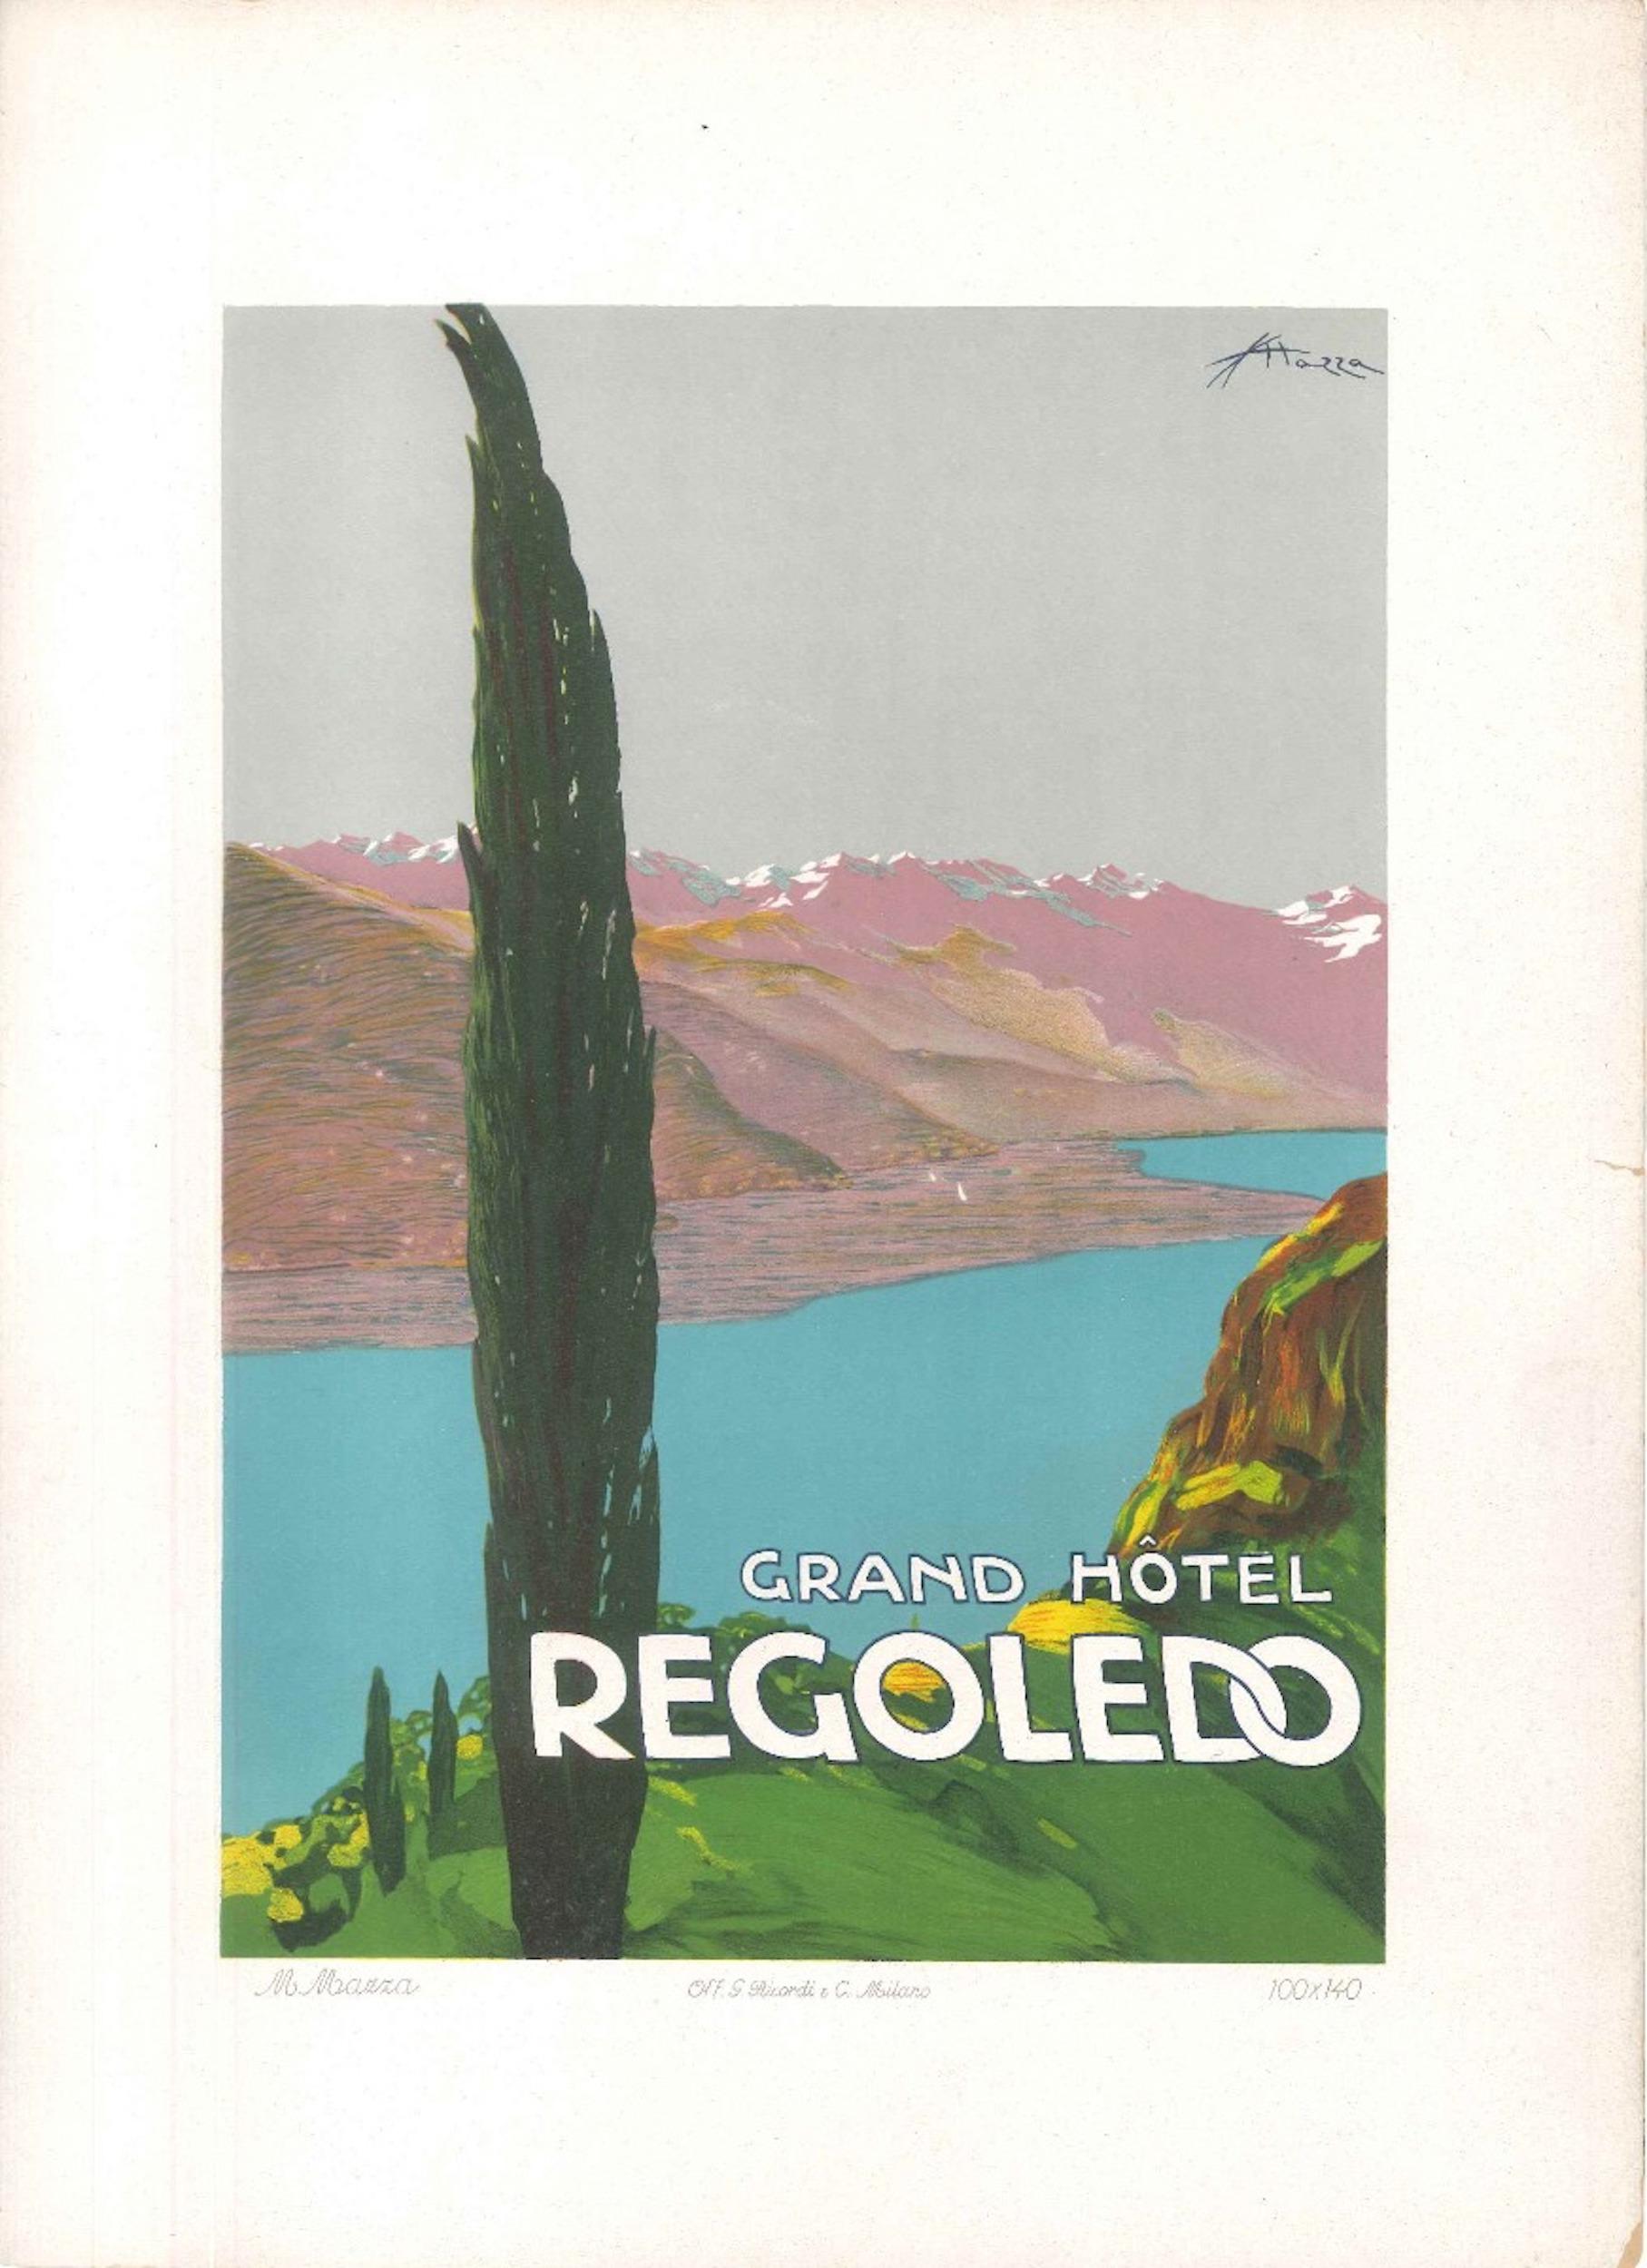 Grand Hotel Rogoledo - Original Advertising Lithograph by E. Sacchetti -1914 ca. - Print by Enrico Sacchetti